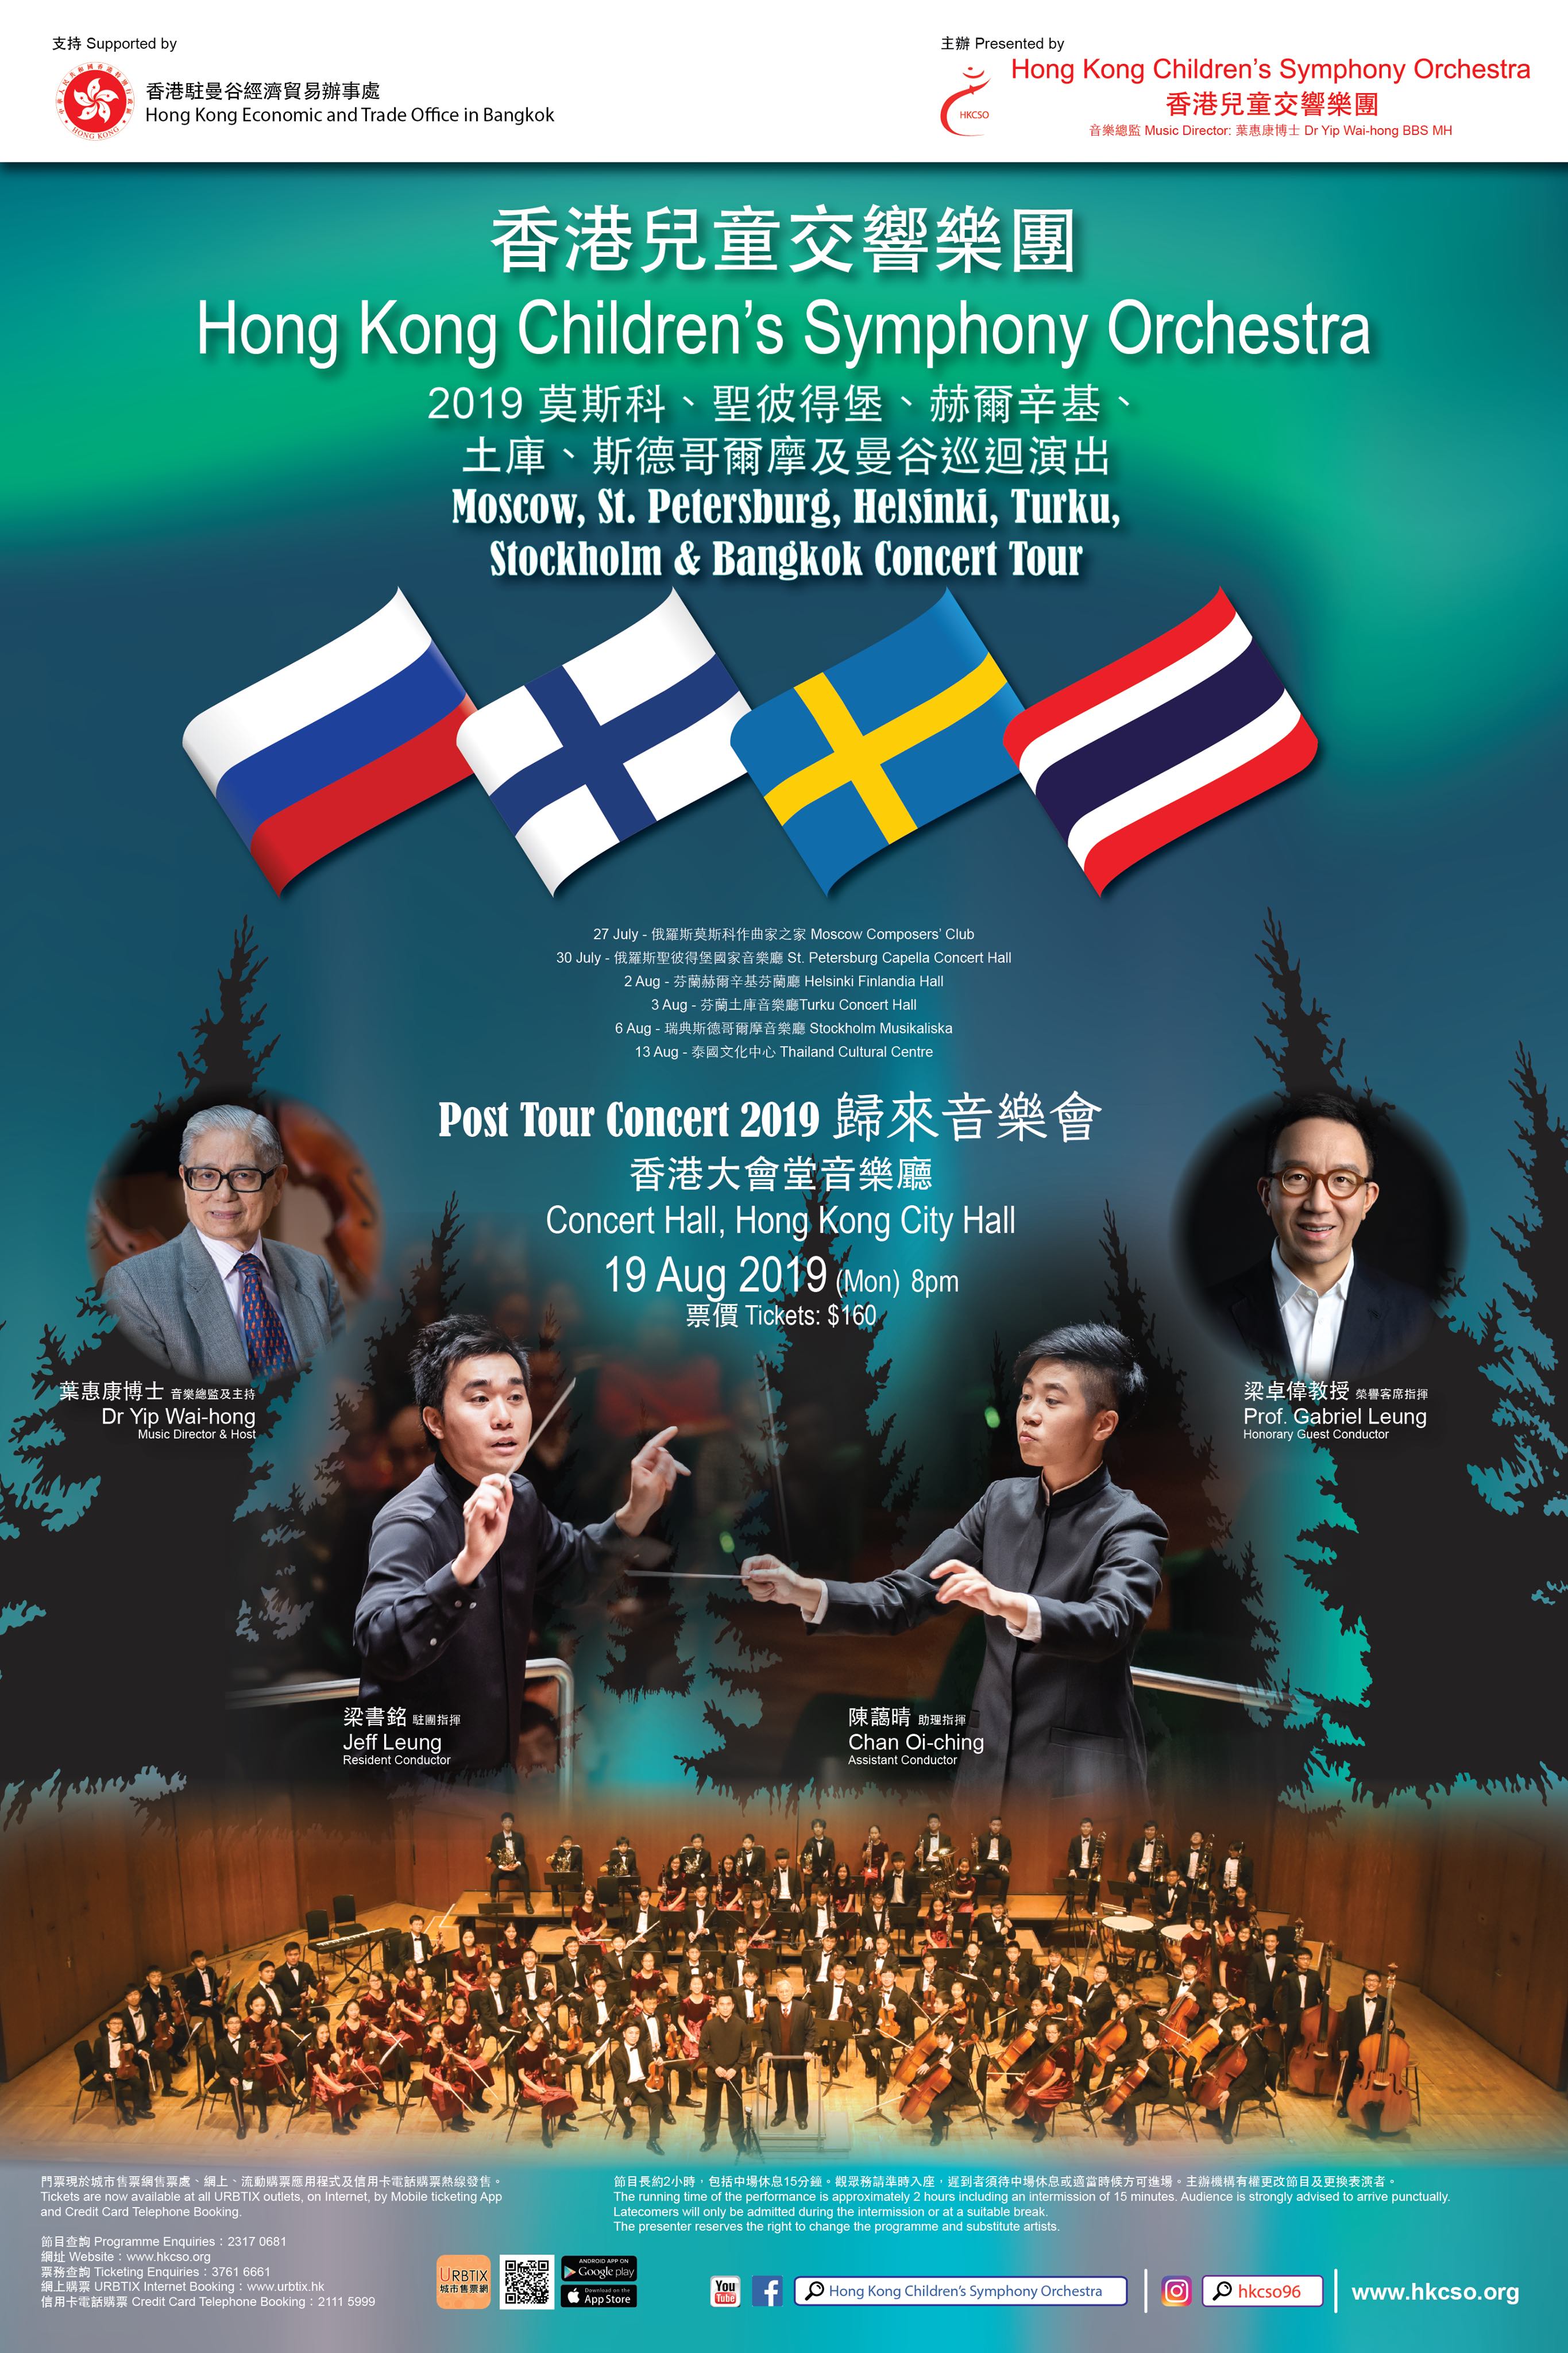 HKCSO Moscow, St. Petersburg, Helsinki, Turku, Stockholm & Bangkok Post Tour Concert 2019